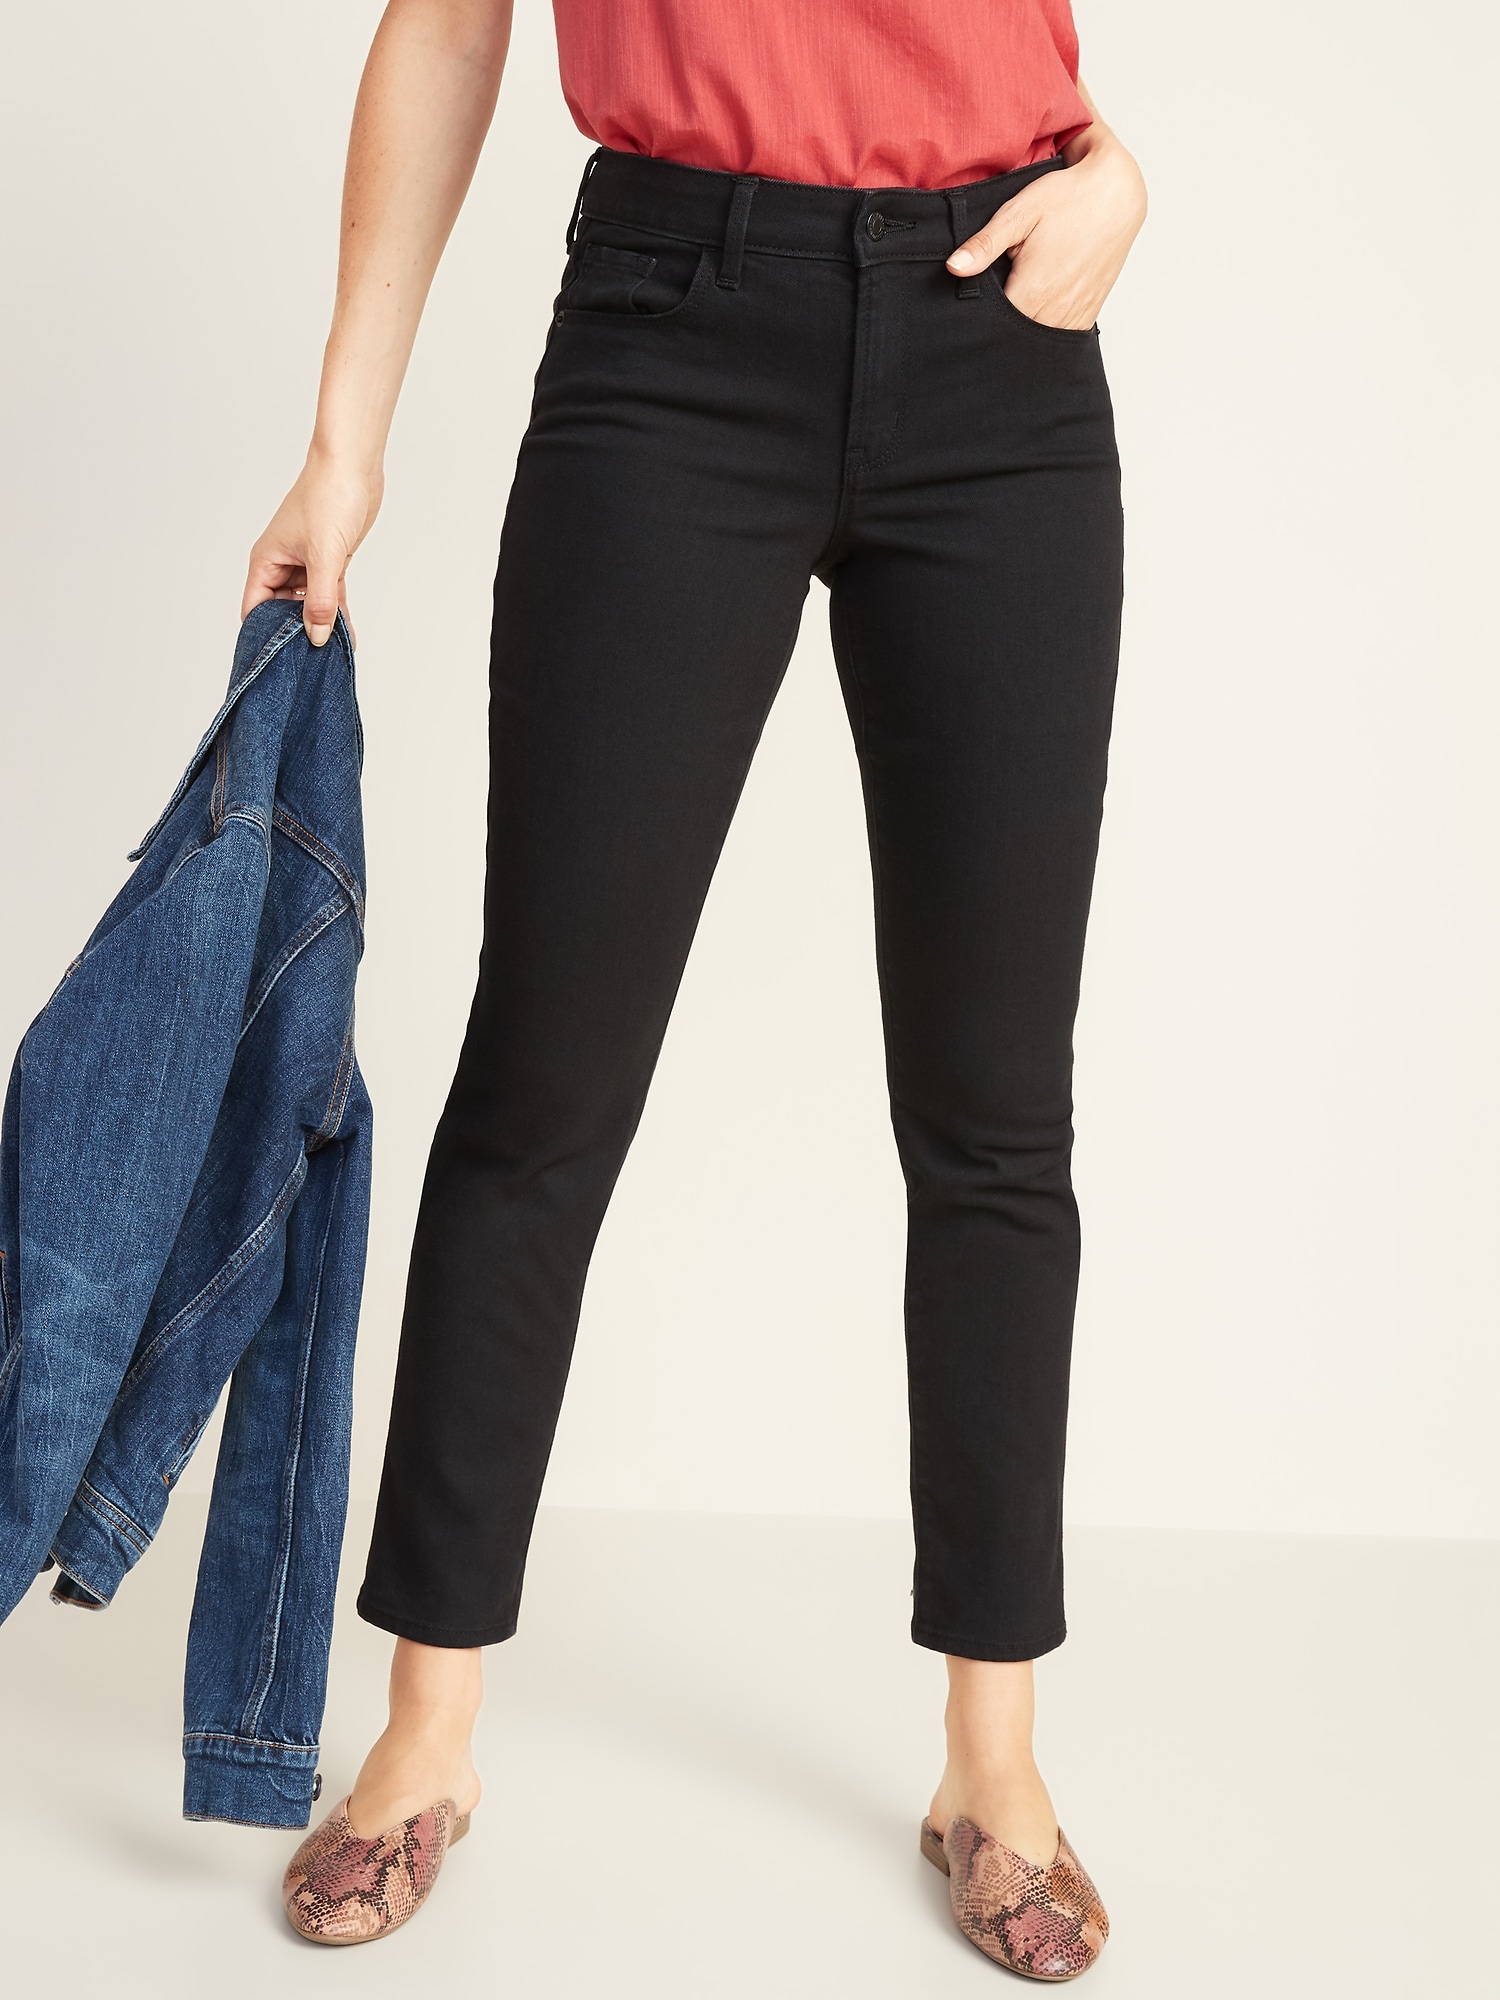 black slim jeans womens